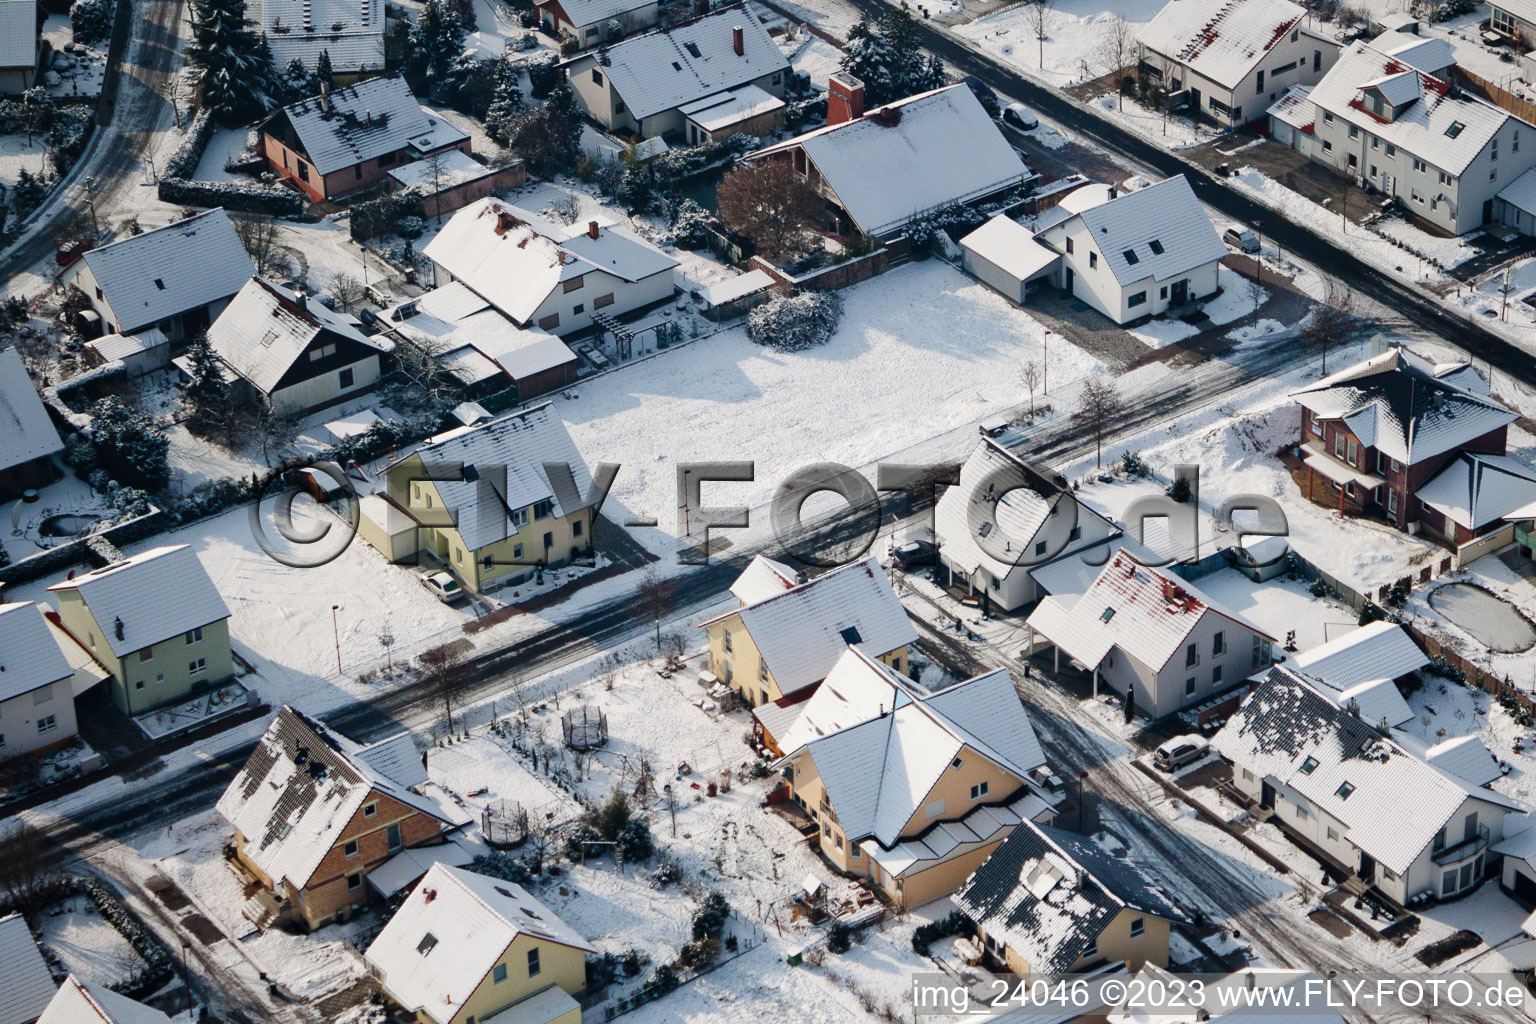 Tongruben new development area in Rheinzabern in the state Rhineland-Palatinate, Germany seen from a drone